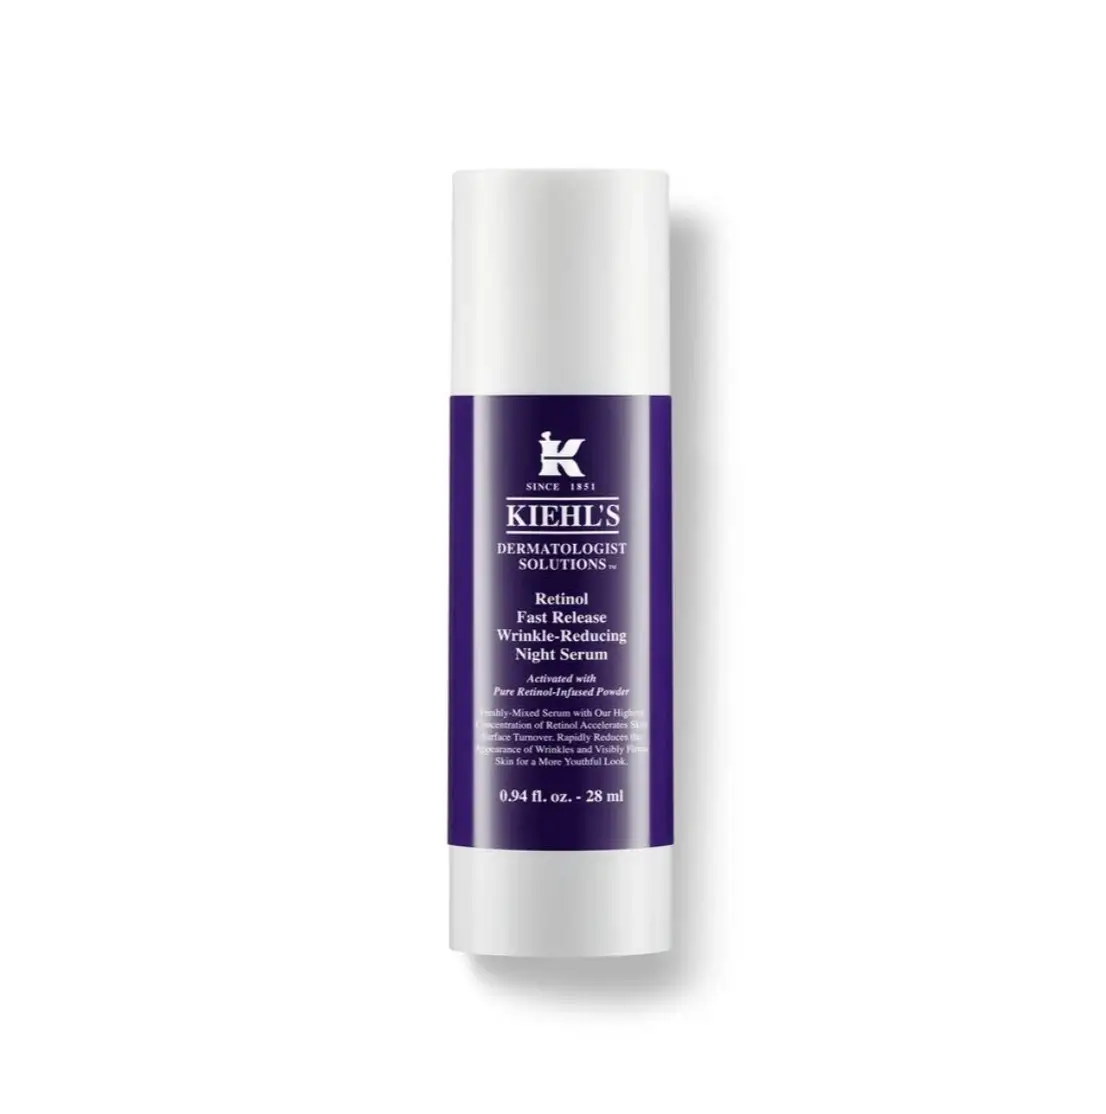 Best Retinol Serum - Kiehl's Retinol Fast Release Wrinkle-Reducing Night Serum